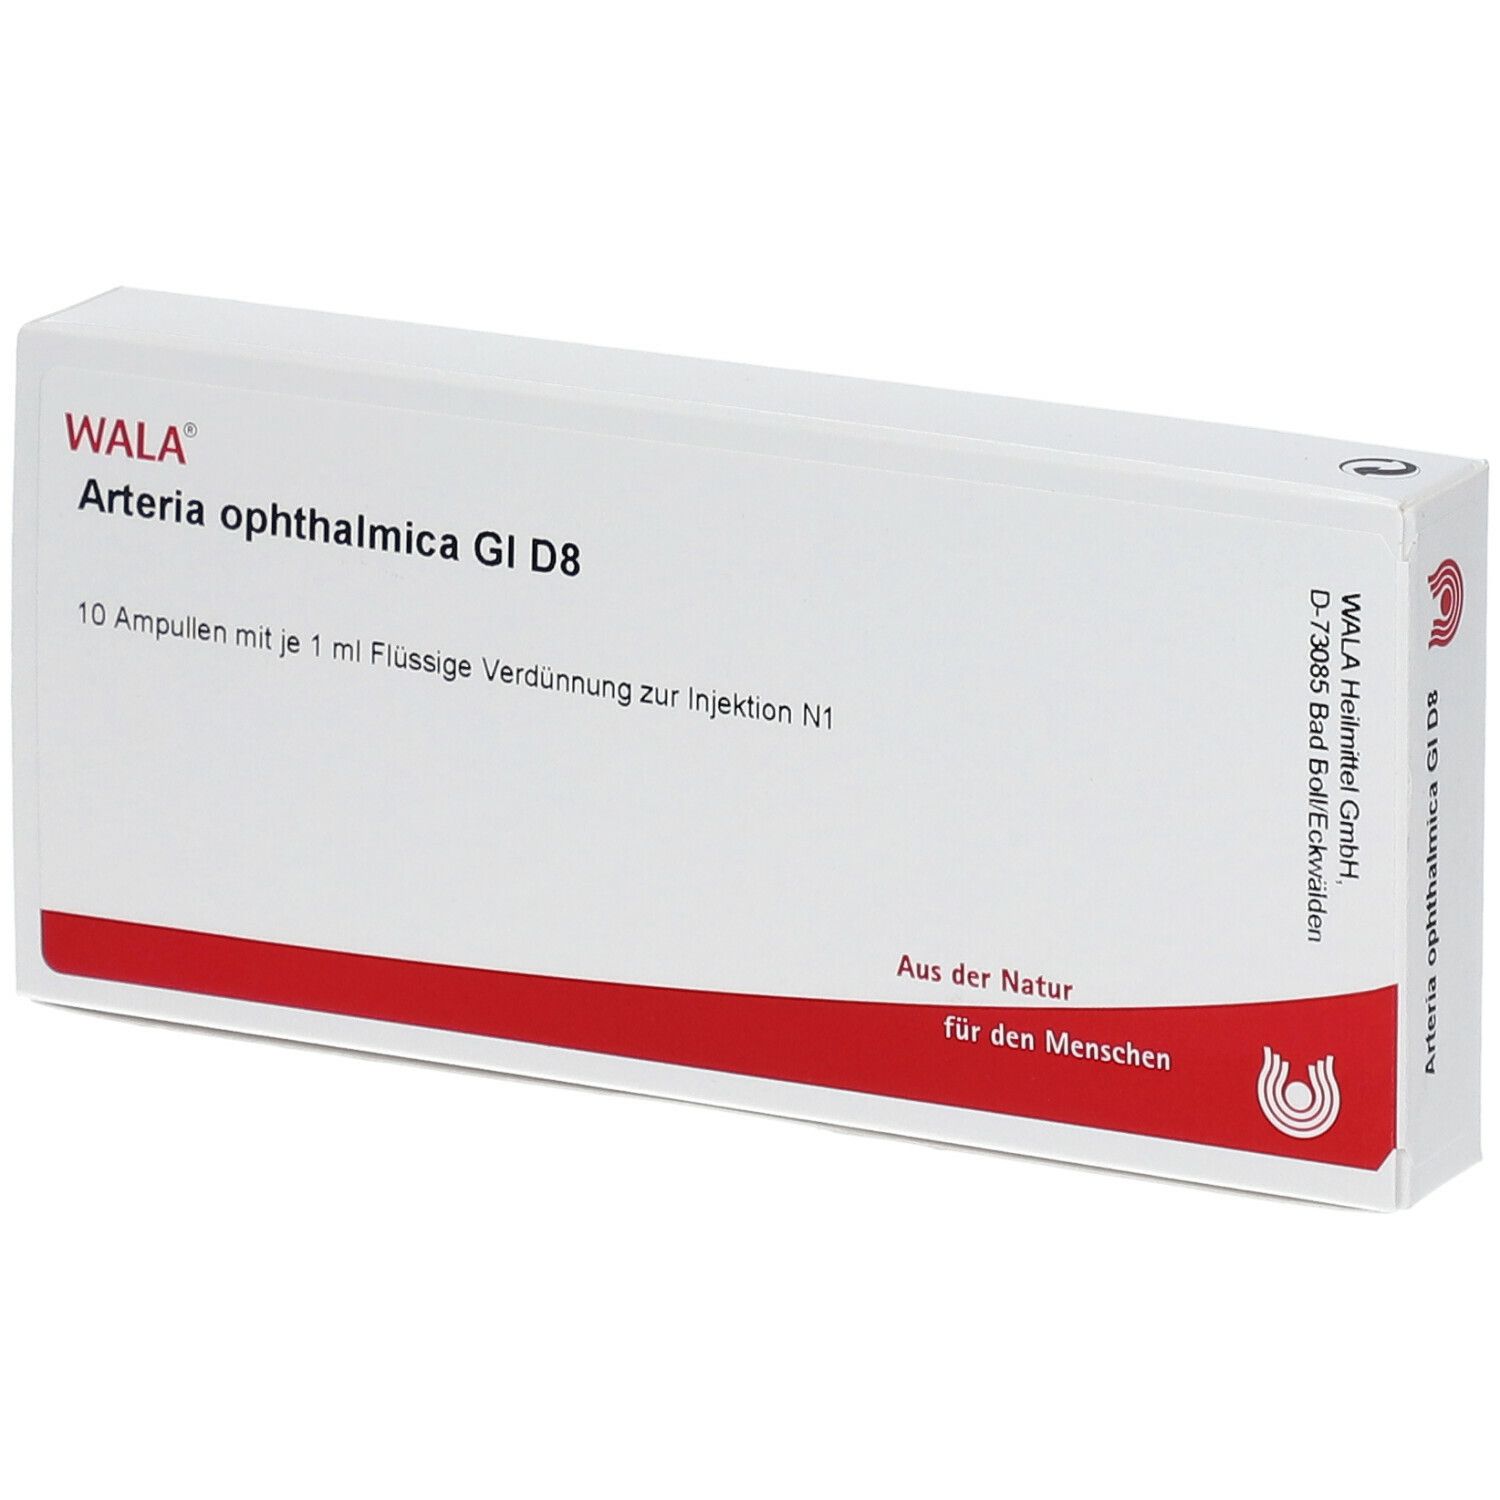 WALA® Arteria ophthalmica Gl D 8